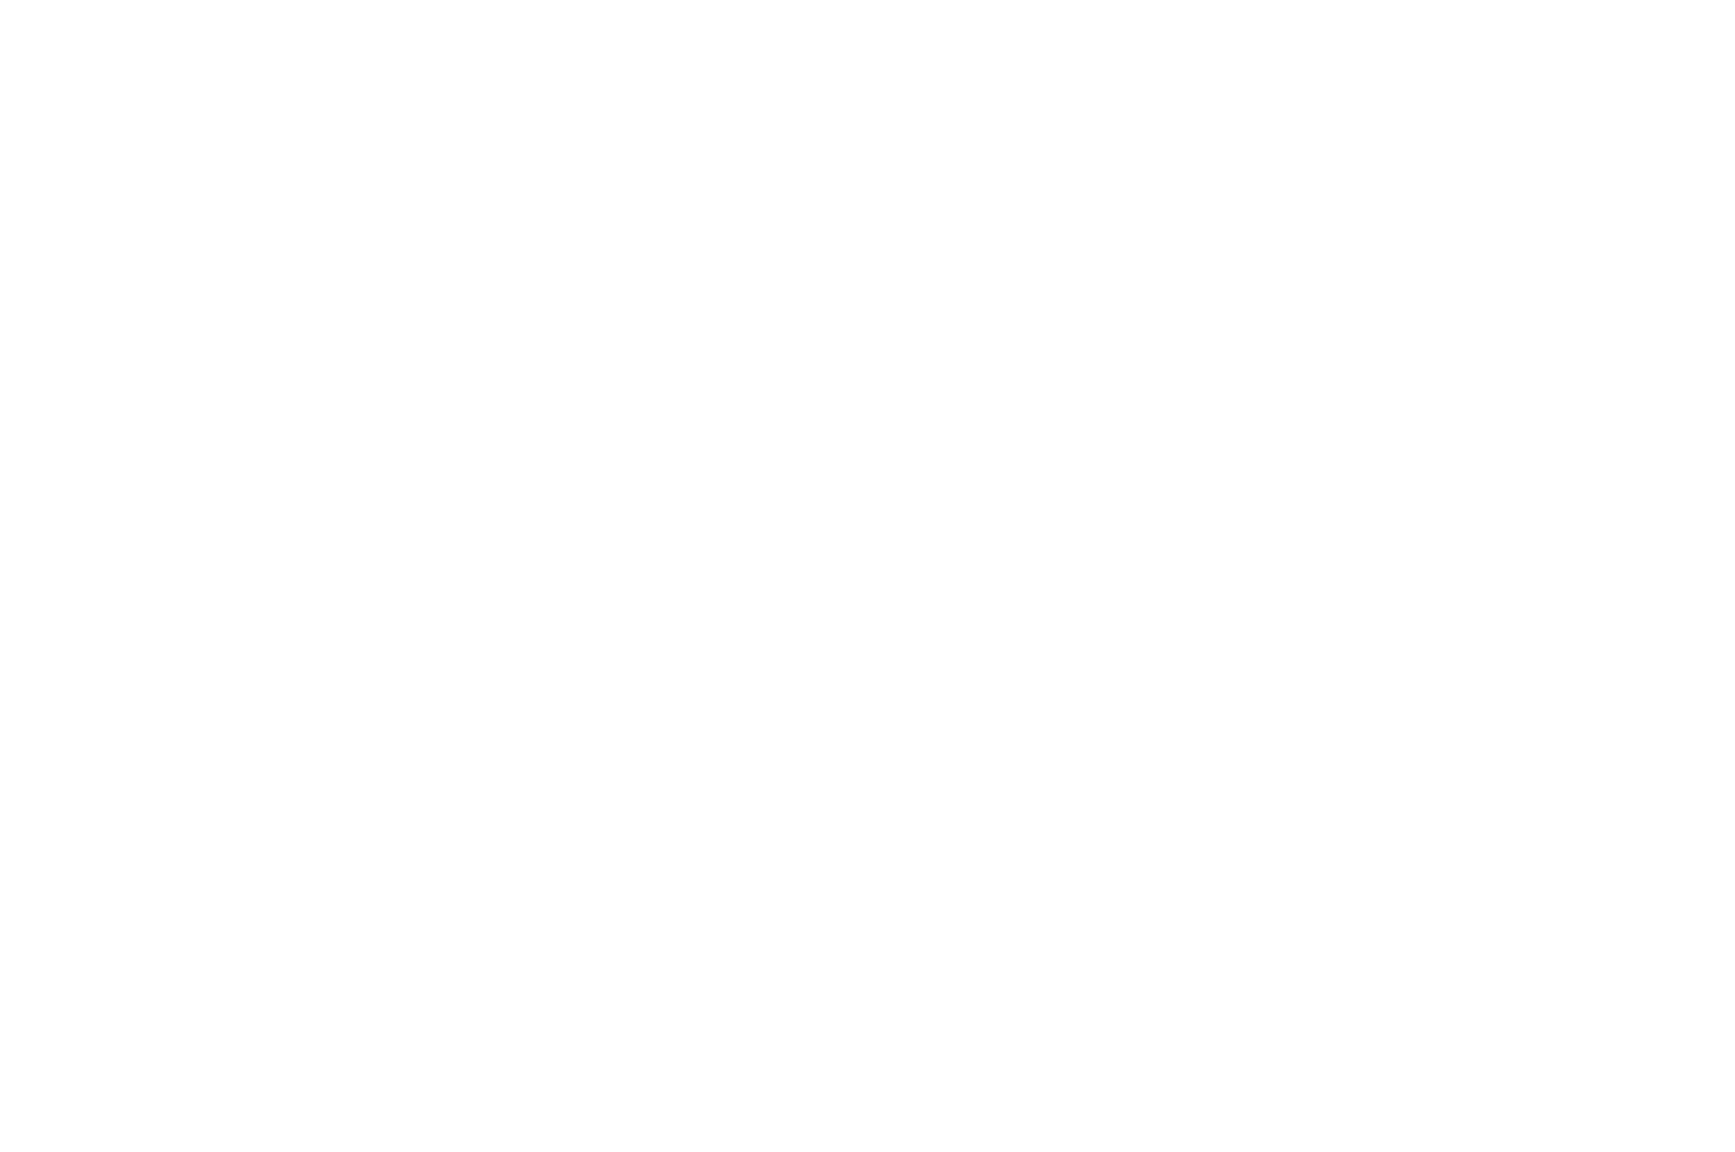 BEST FEATURE FILM NOMINEE - Content Film Festival and Media Summit - 2021